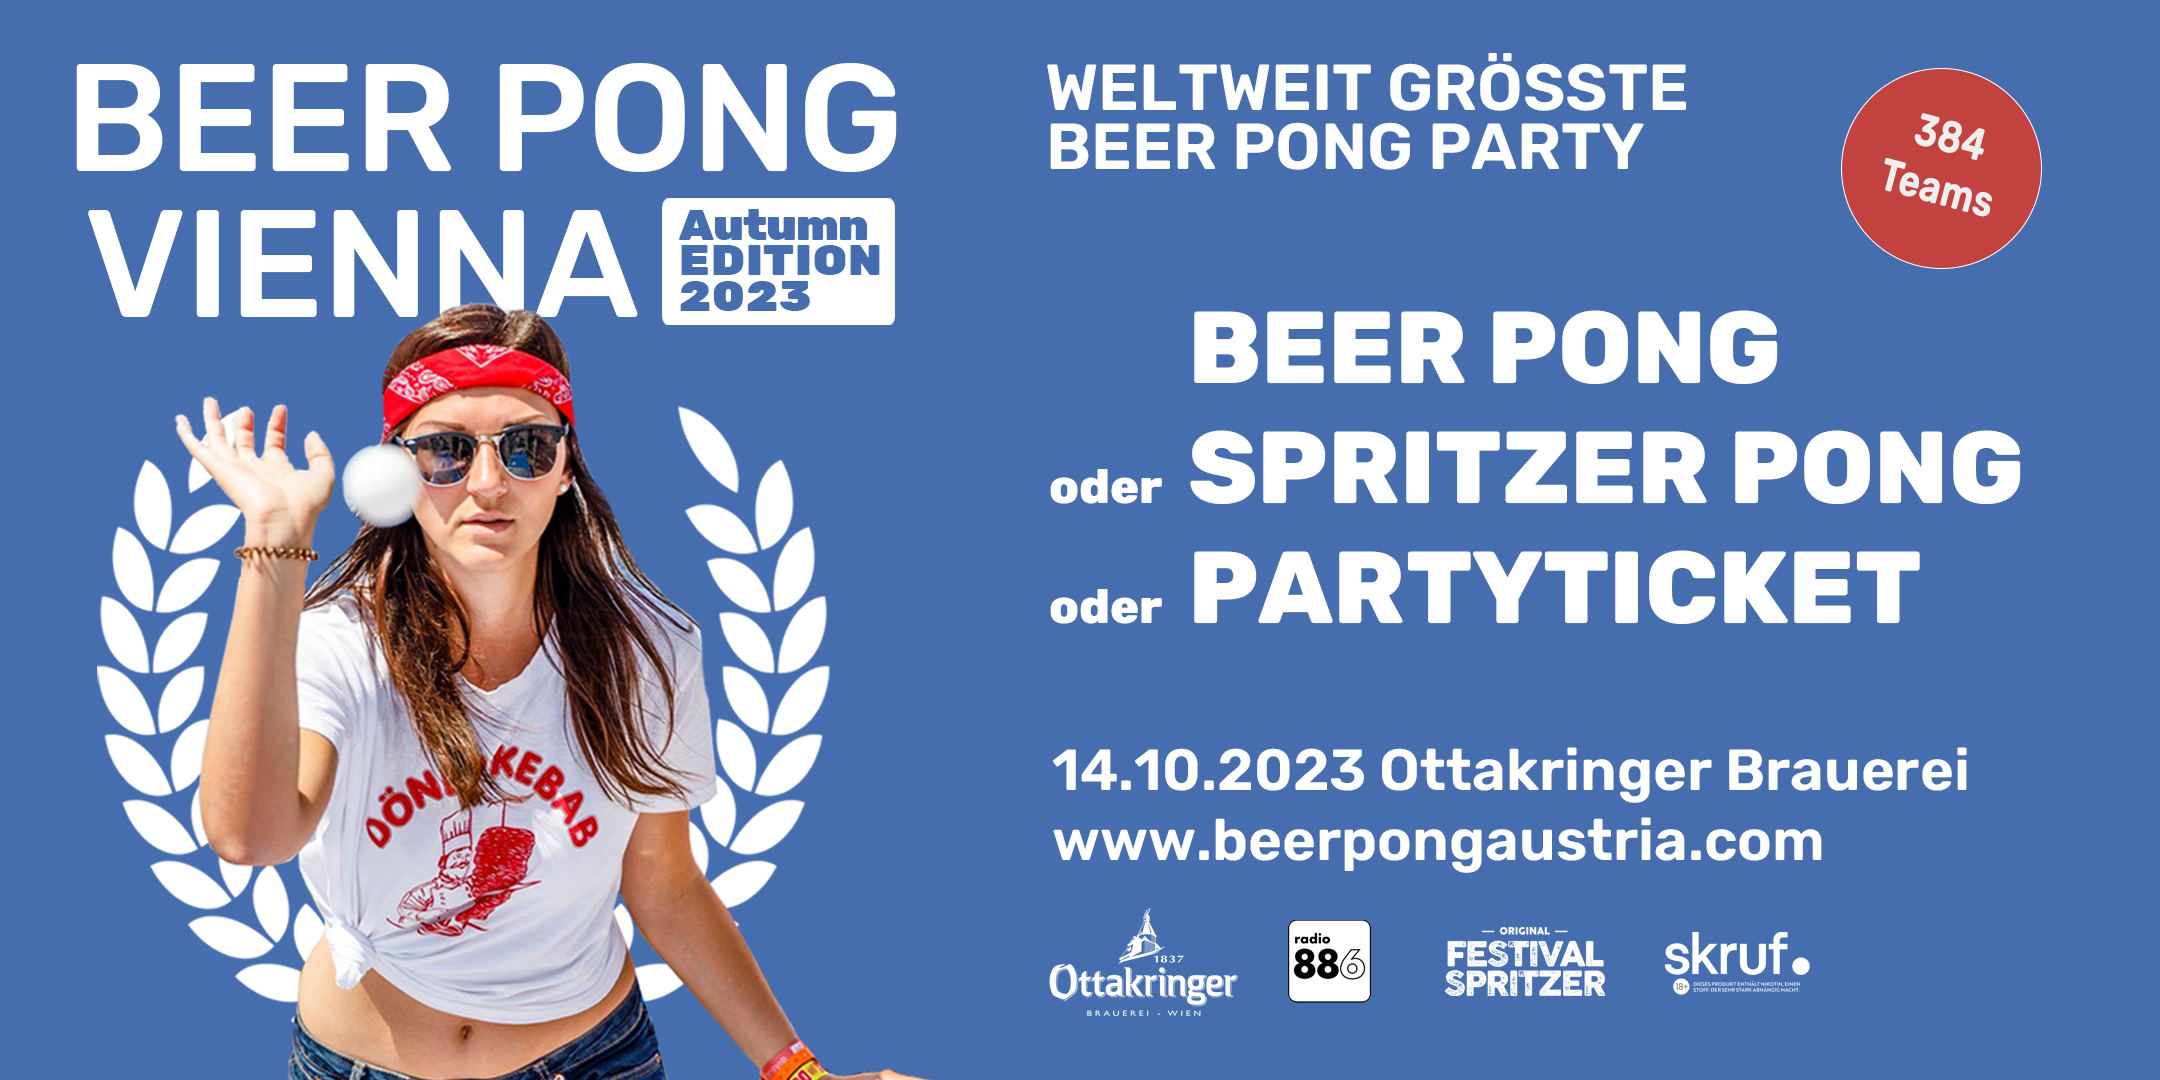 Beer Pong Vienna 2023 Autumn Edition am 14. October 2023 @ Ottakringer Brauerei.